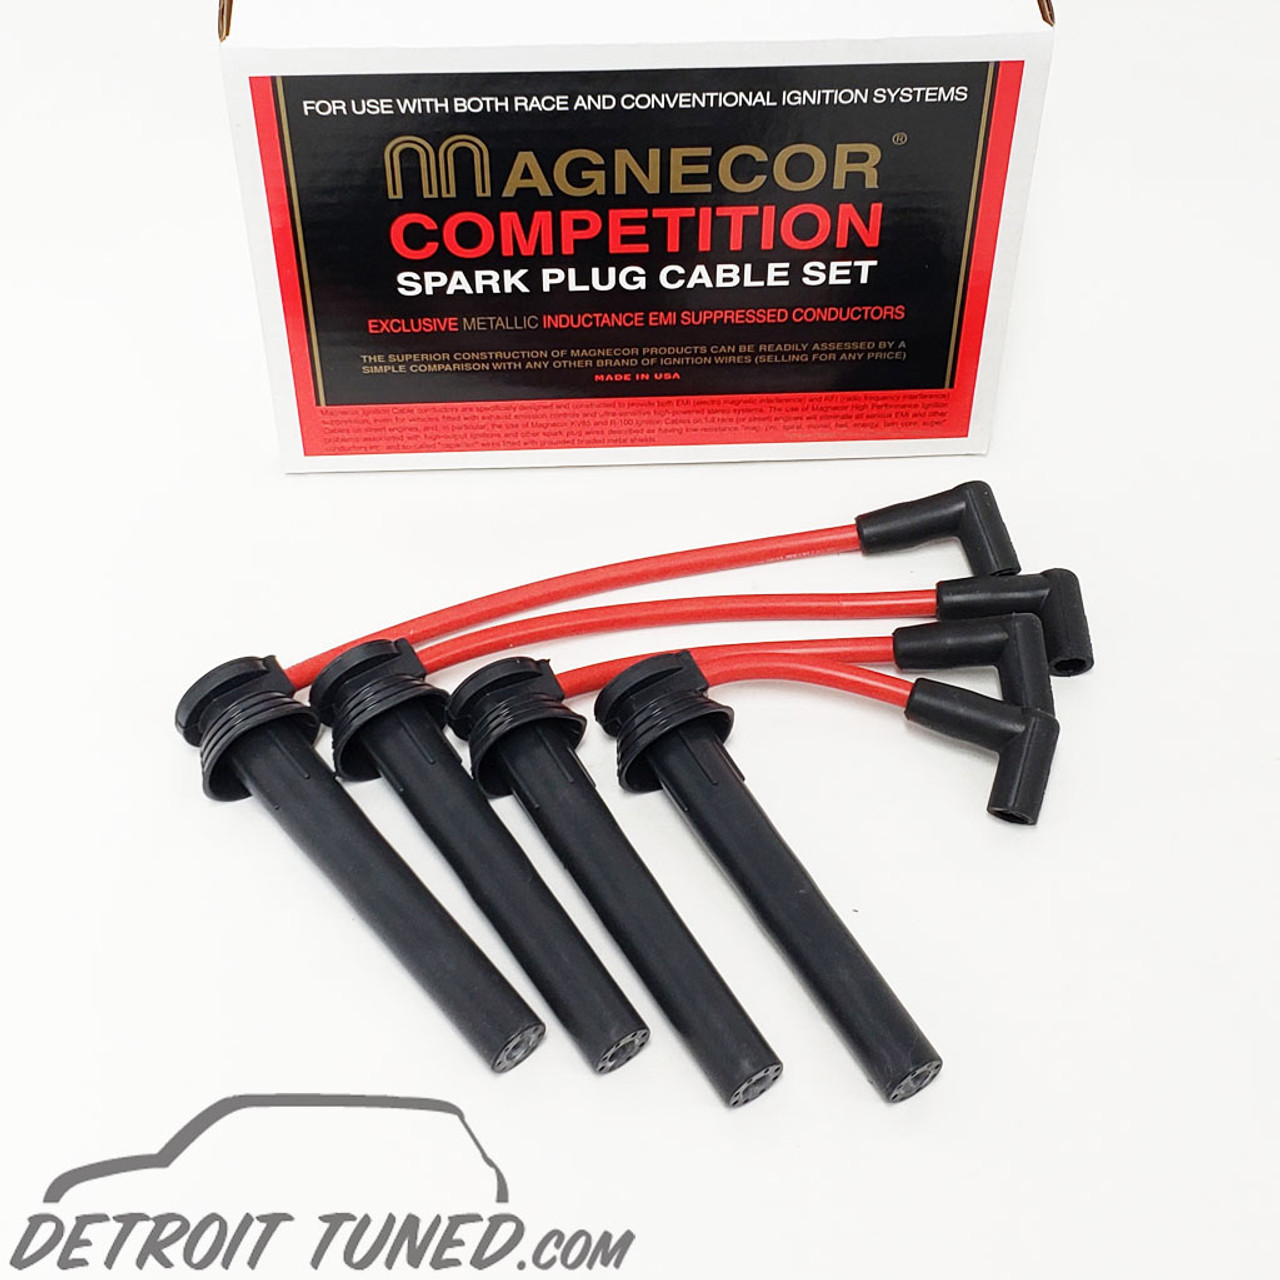 Magnecor 8.5 mm performance HT 45308 IGNITION conduit